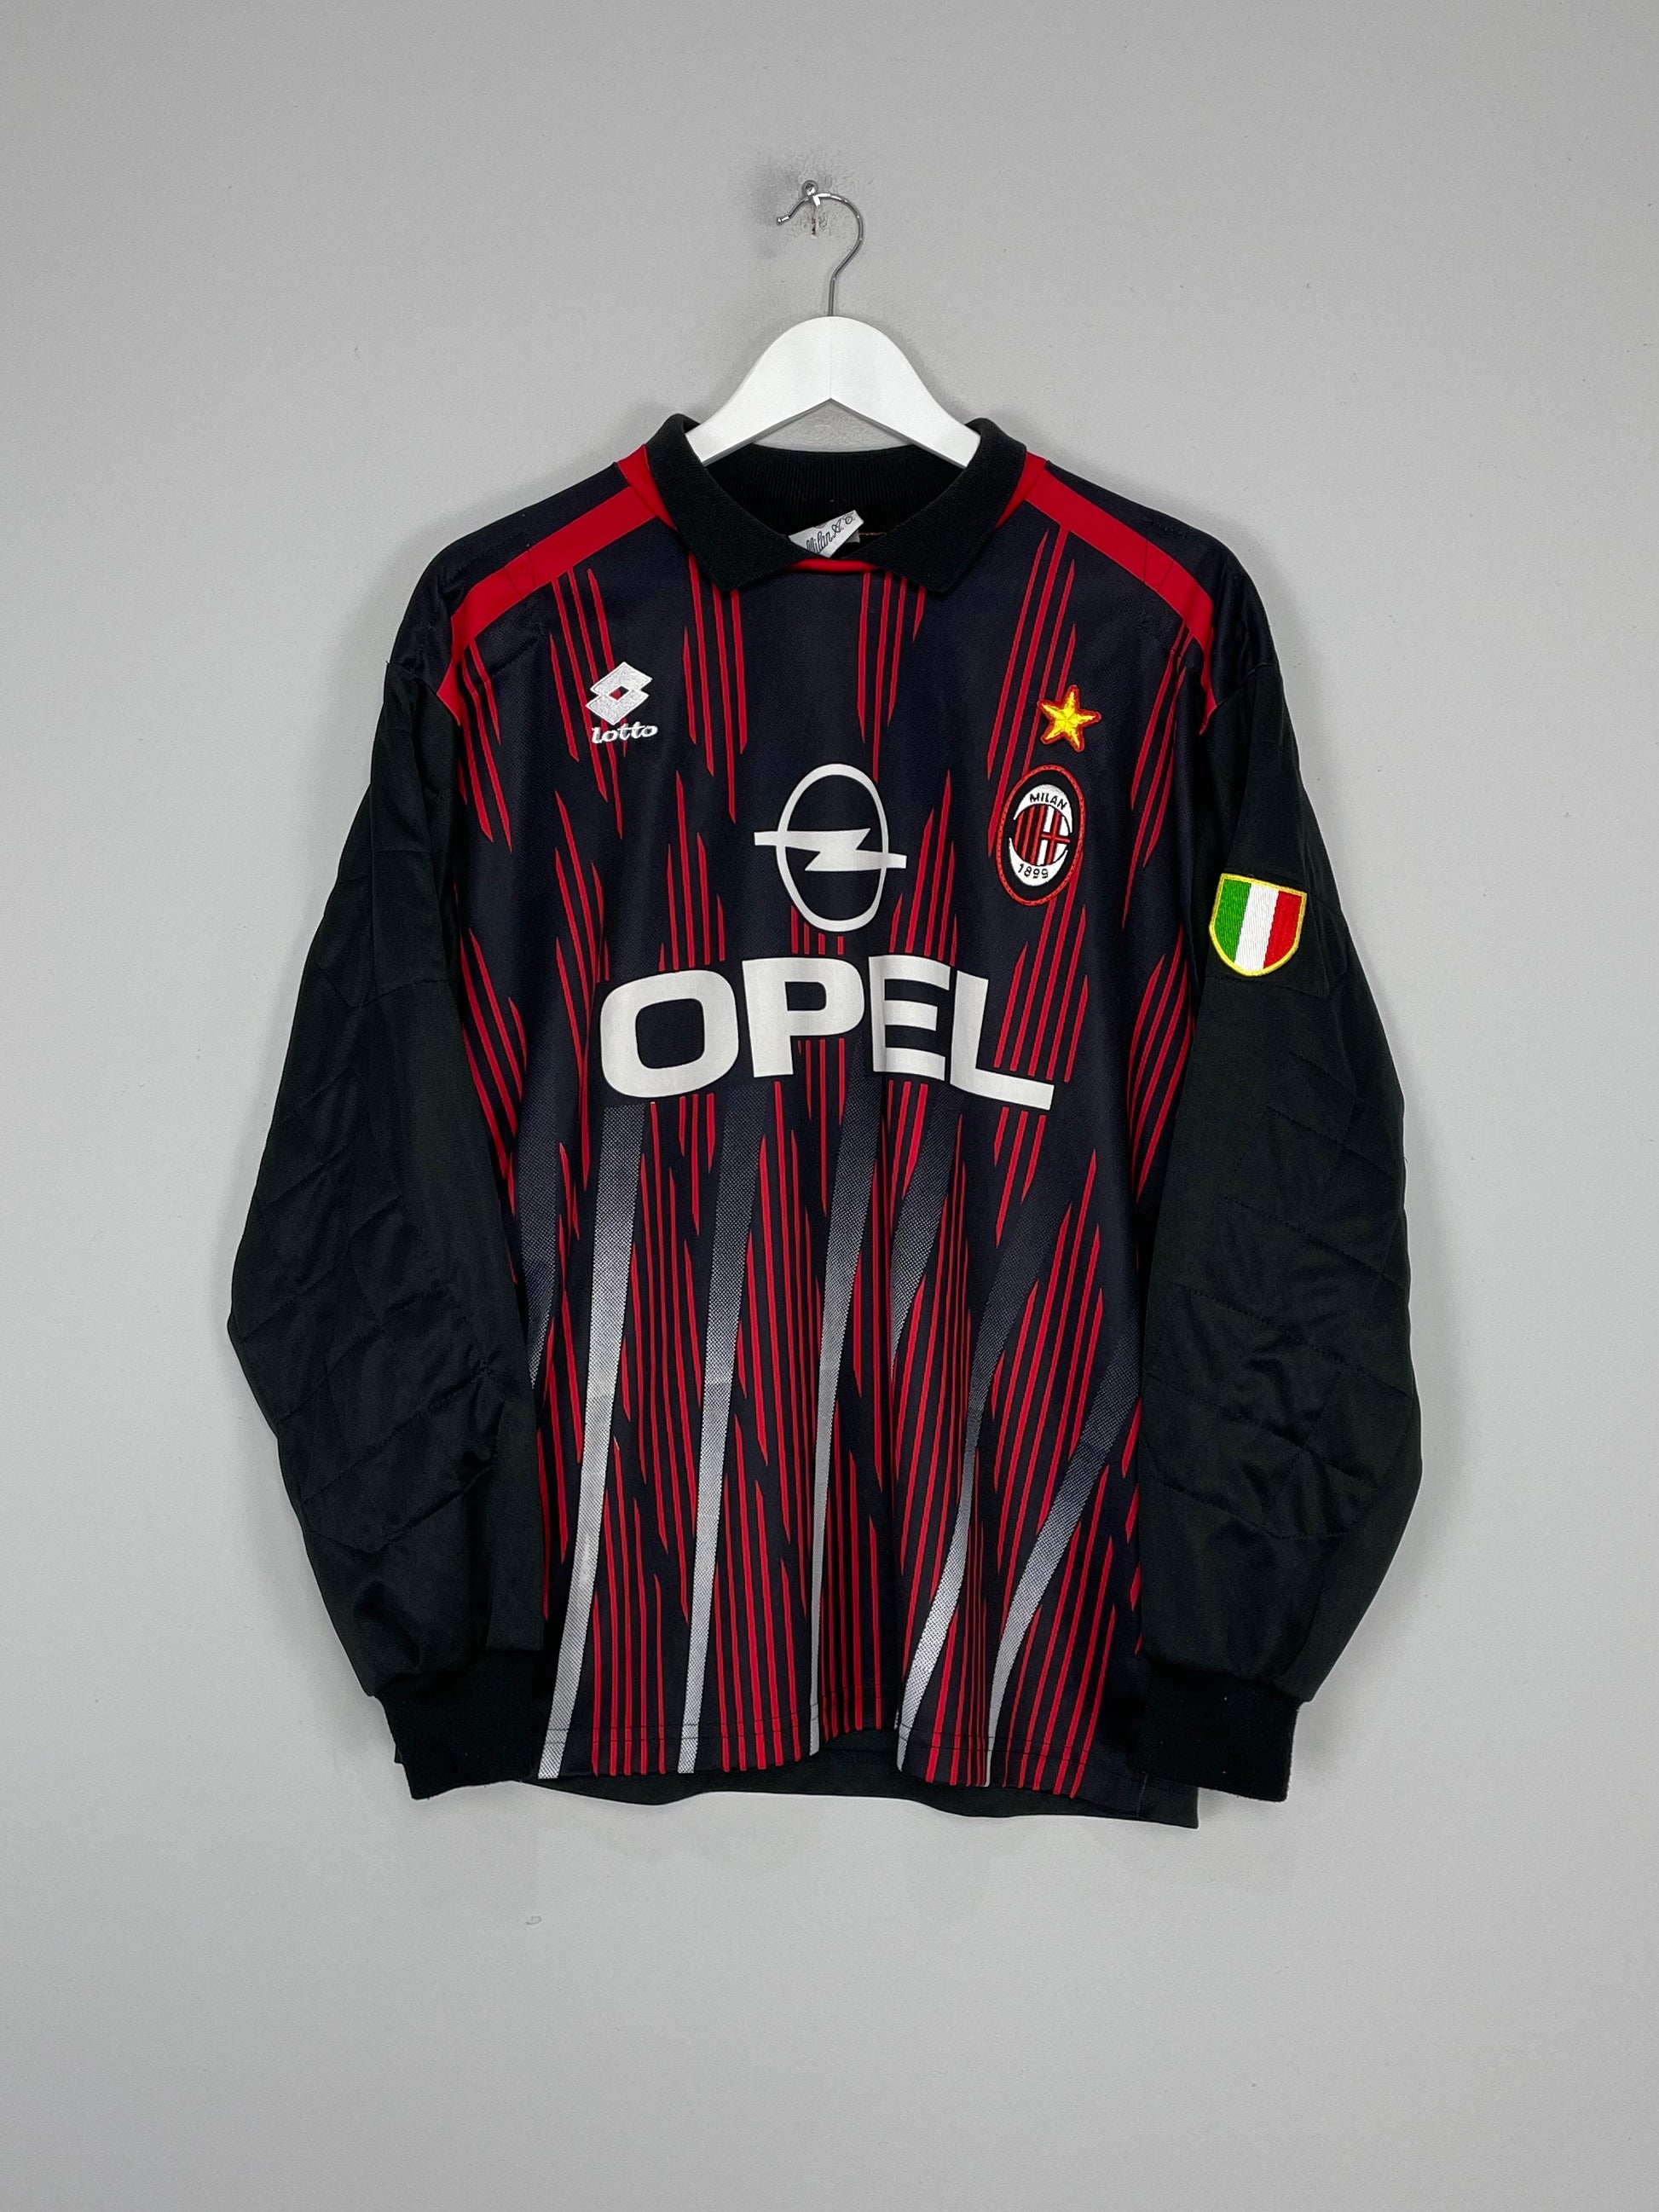 Cult Kits - Buy AC Milan Shirts, Classic Football Kits